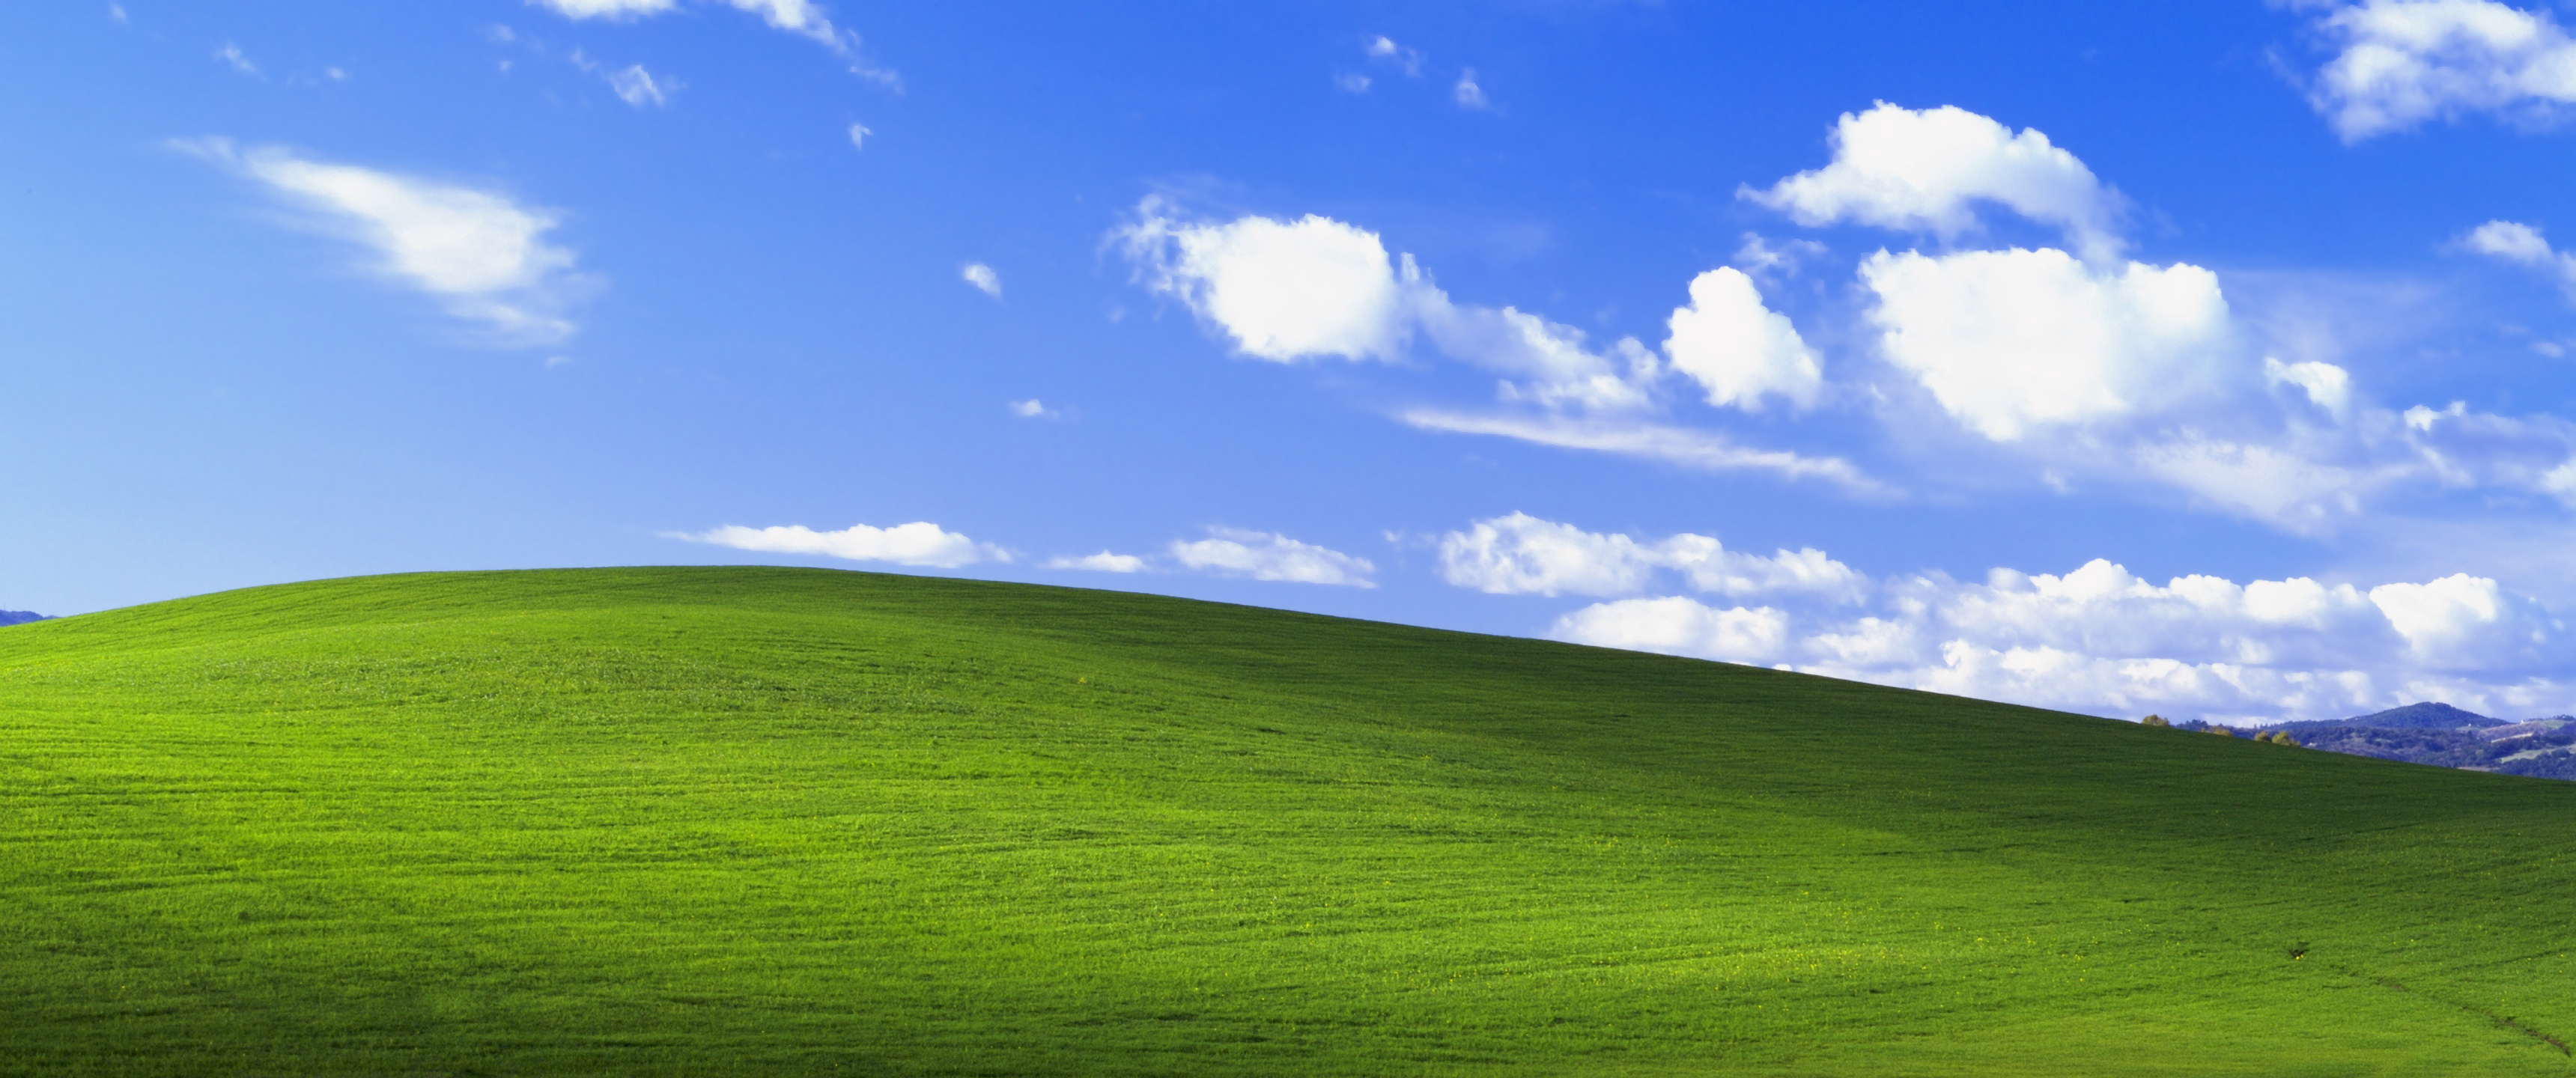 Bliss Windows XP Landscape Clouds Ultrawide Wallpaper -  Resolution:3440x1440 - ID:1252359 